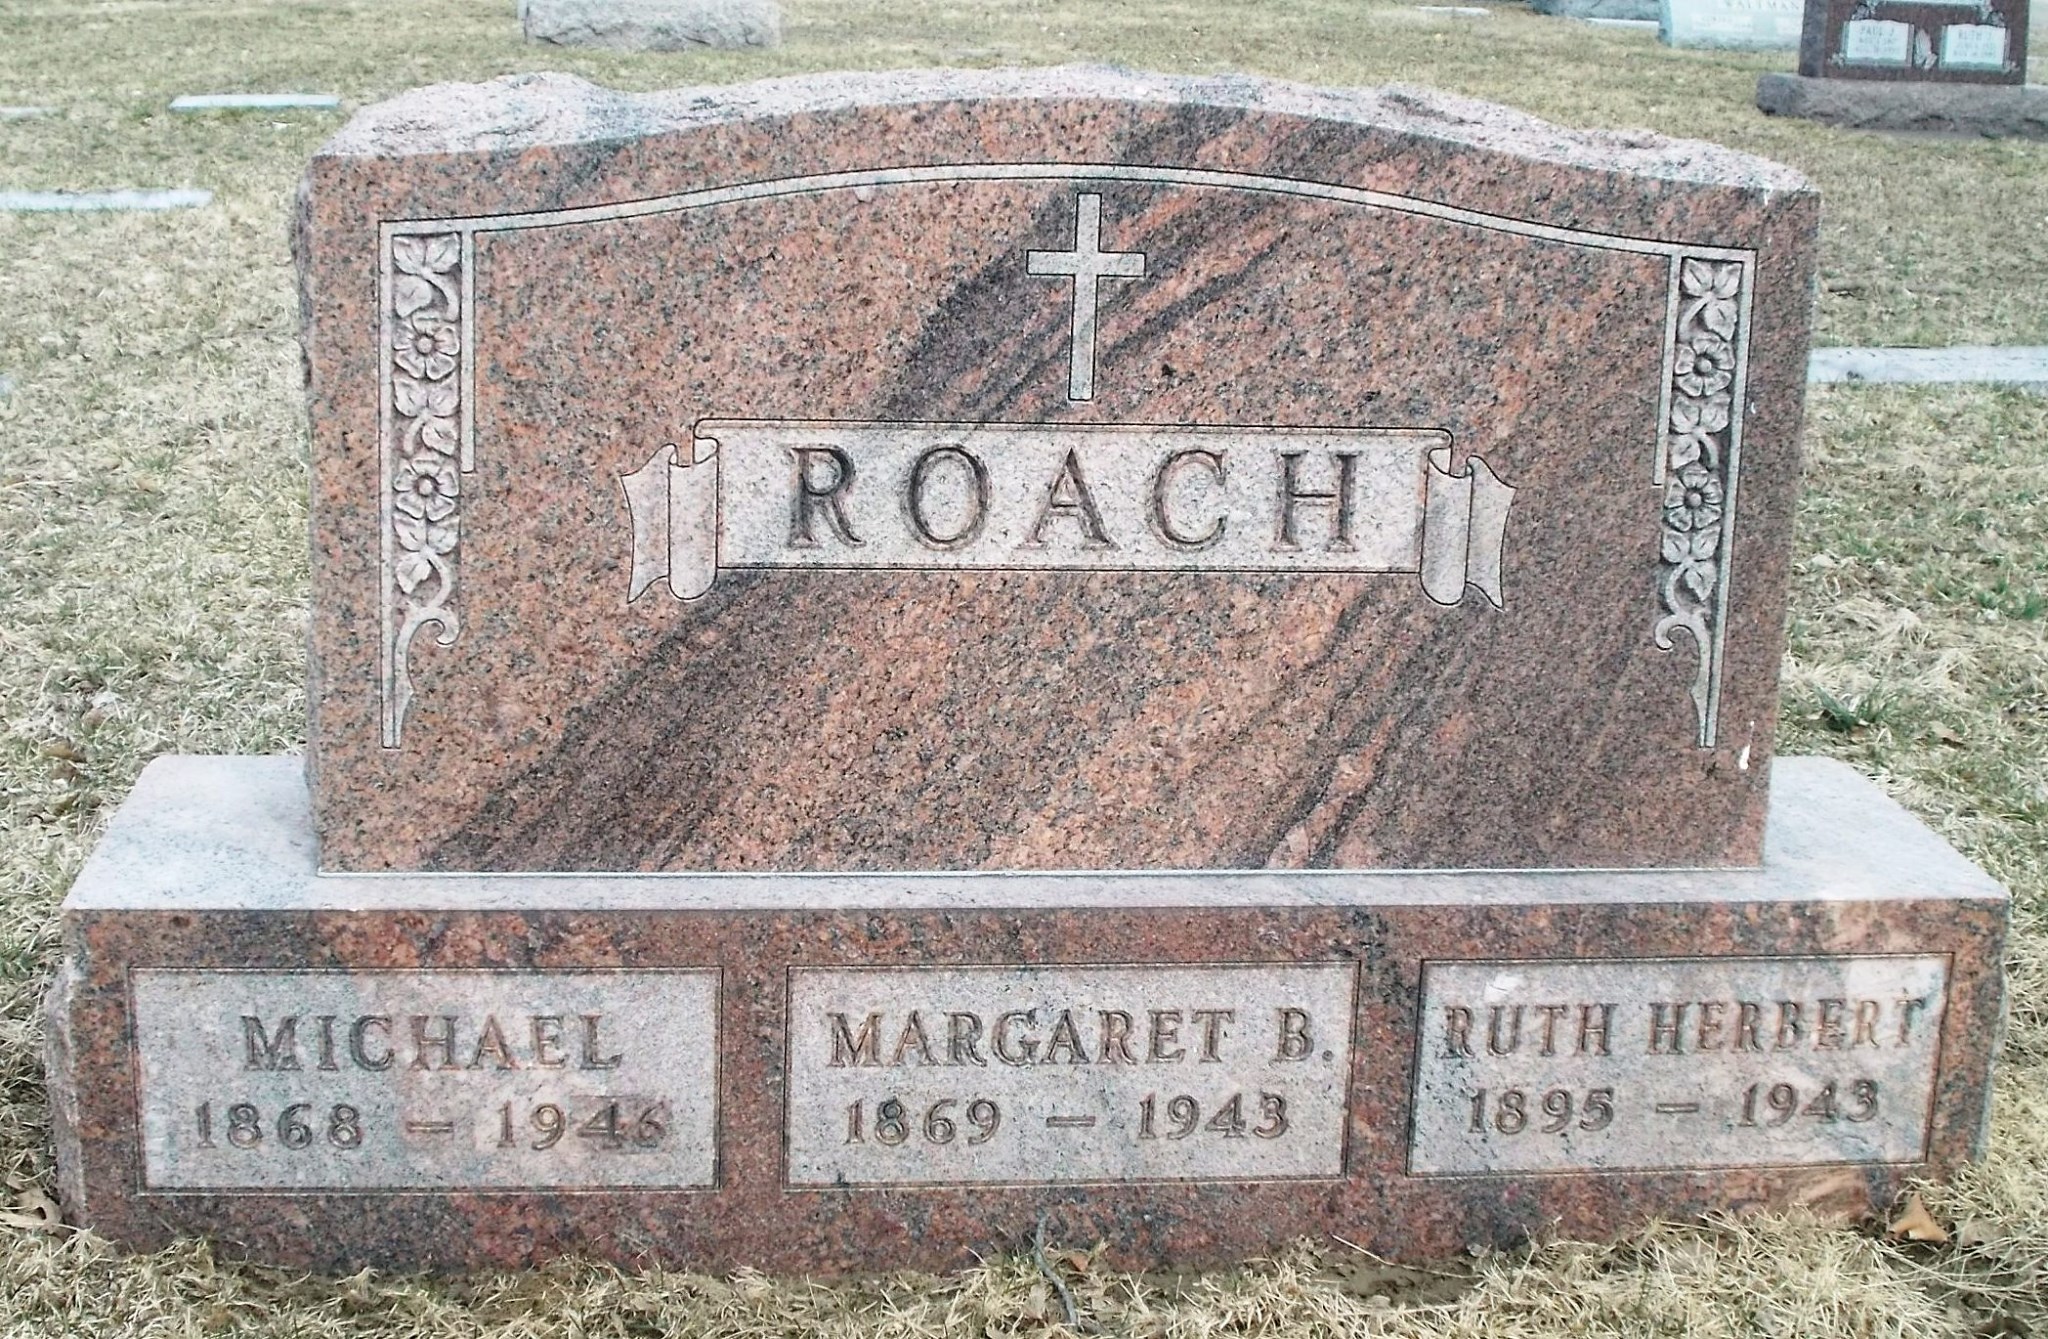 Margaret B Roach